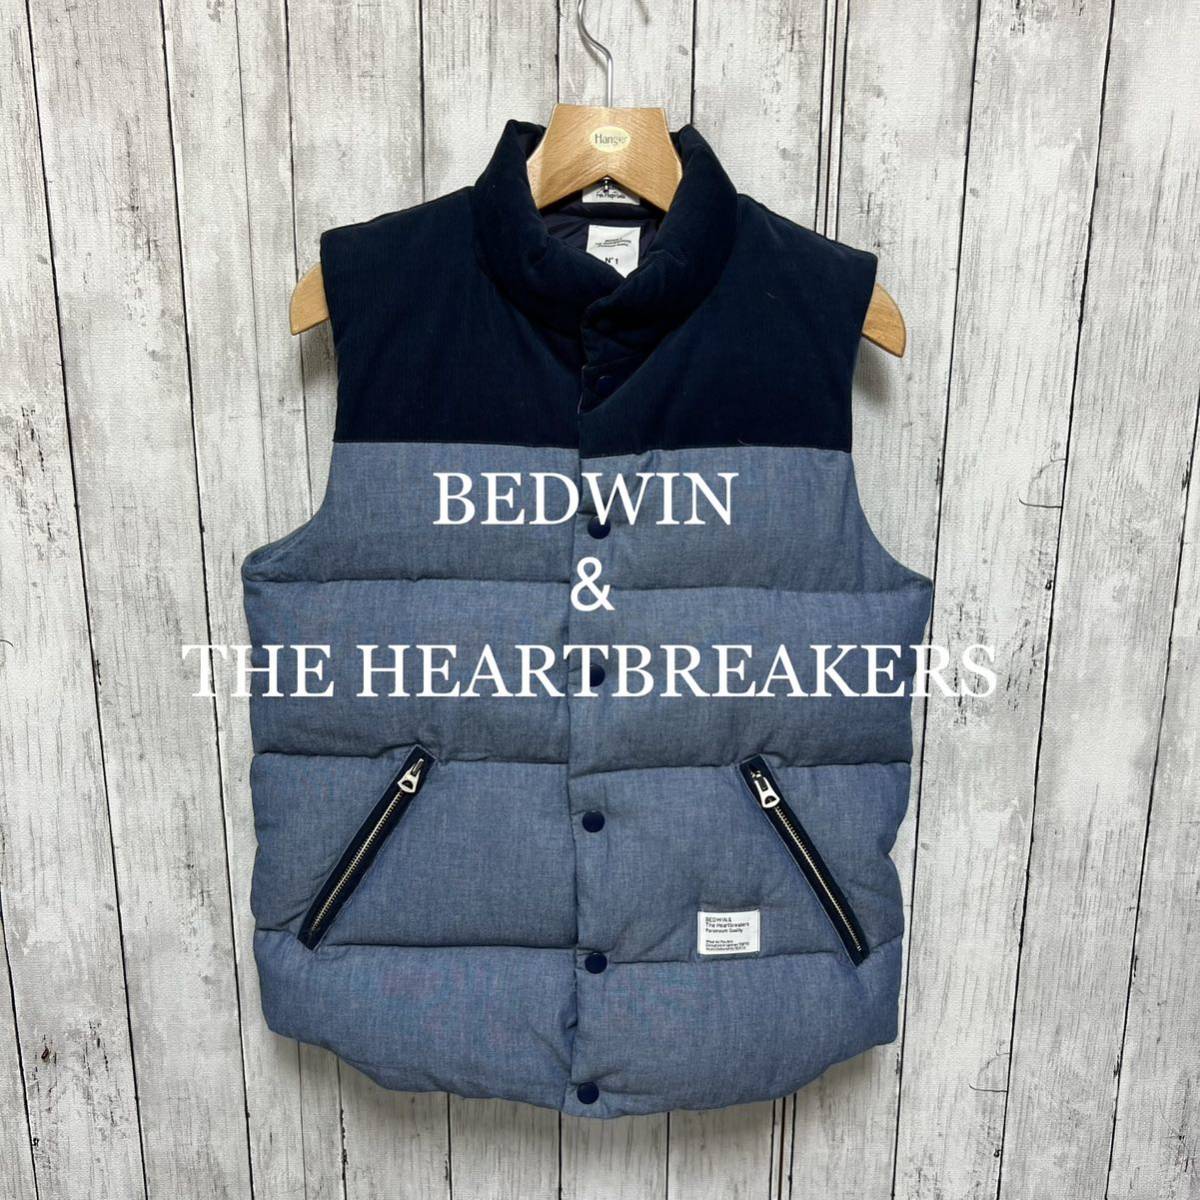  beautiful goods!BEDWIN&THE HEARTBREAKERS down vest!